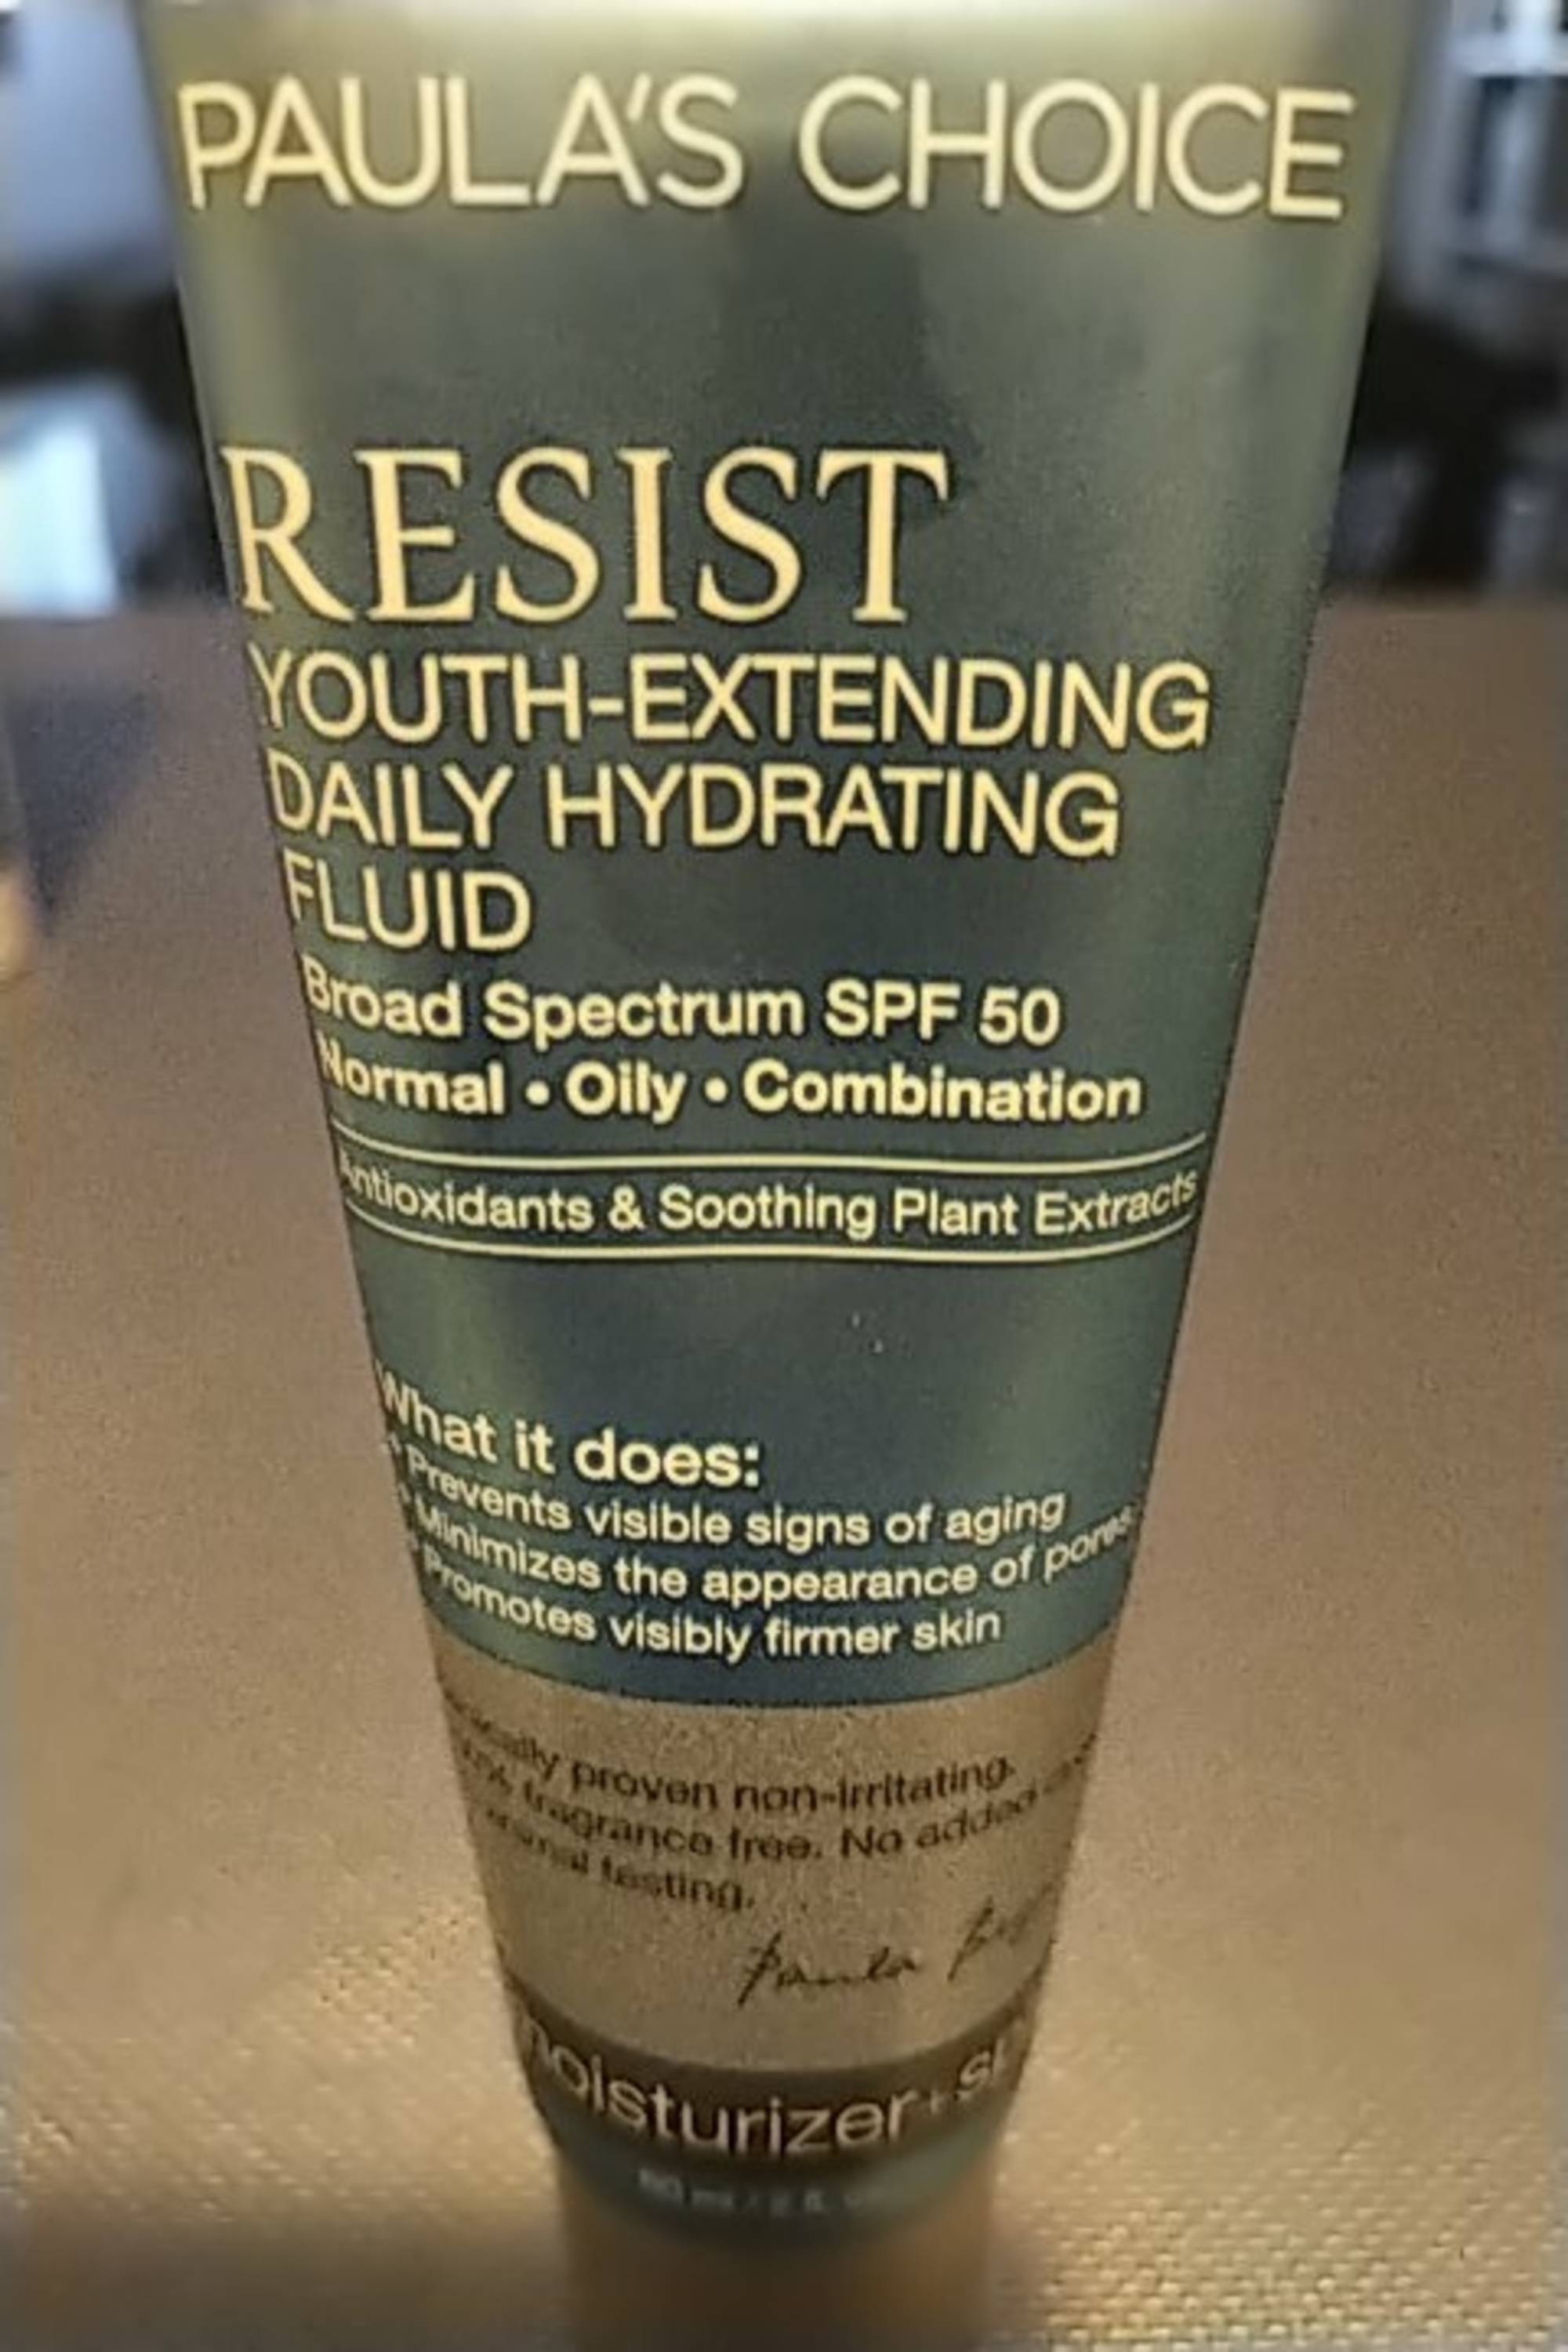 PAULA'S CHOICE - Resist Youth-extending daily hydrating fluid SPF 50 